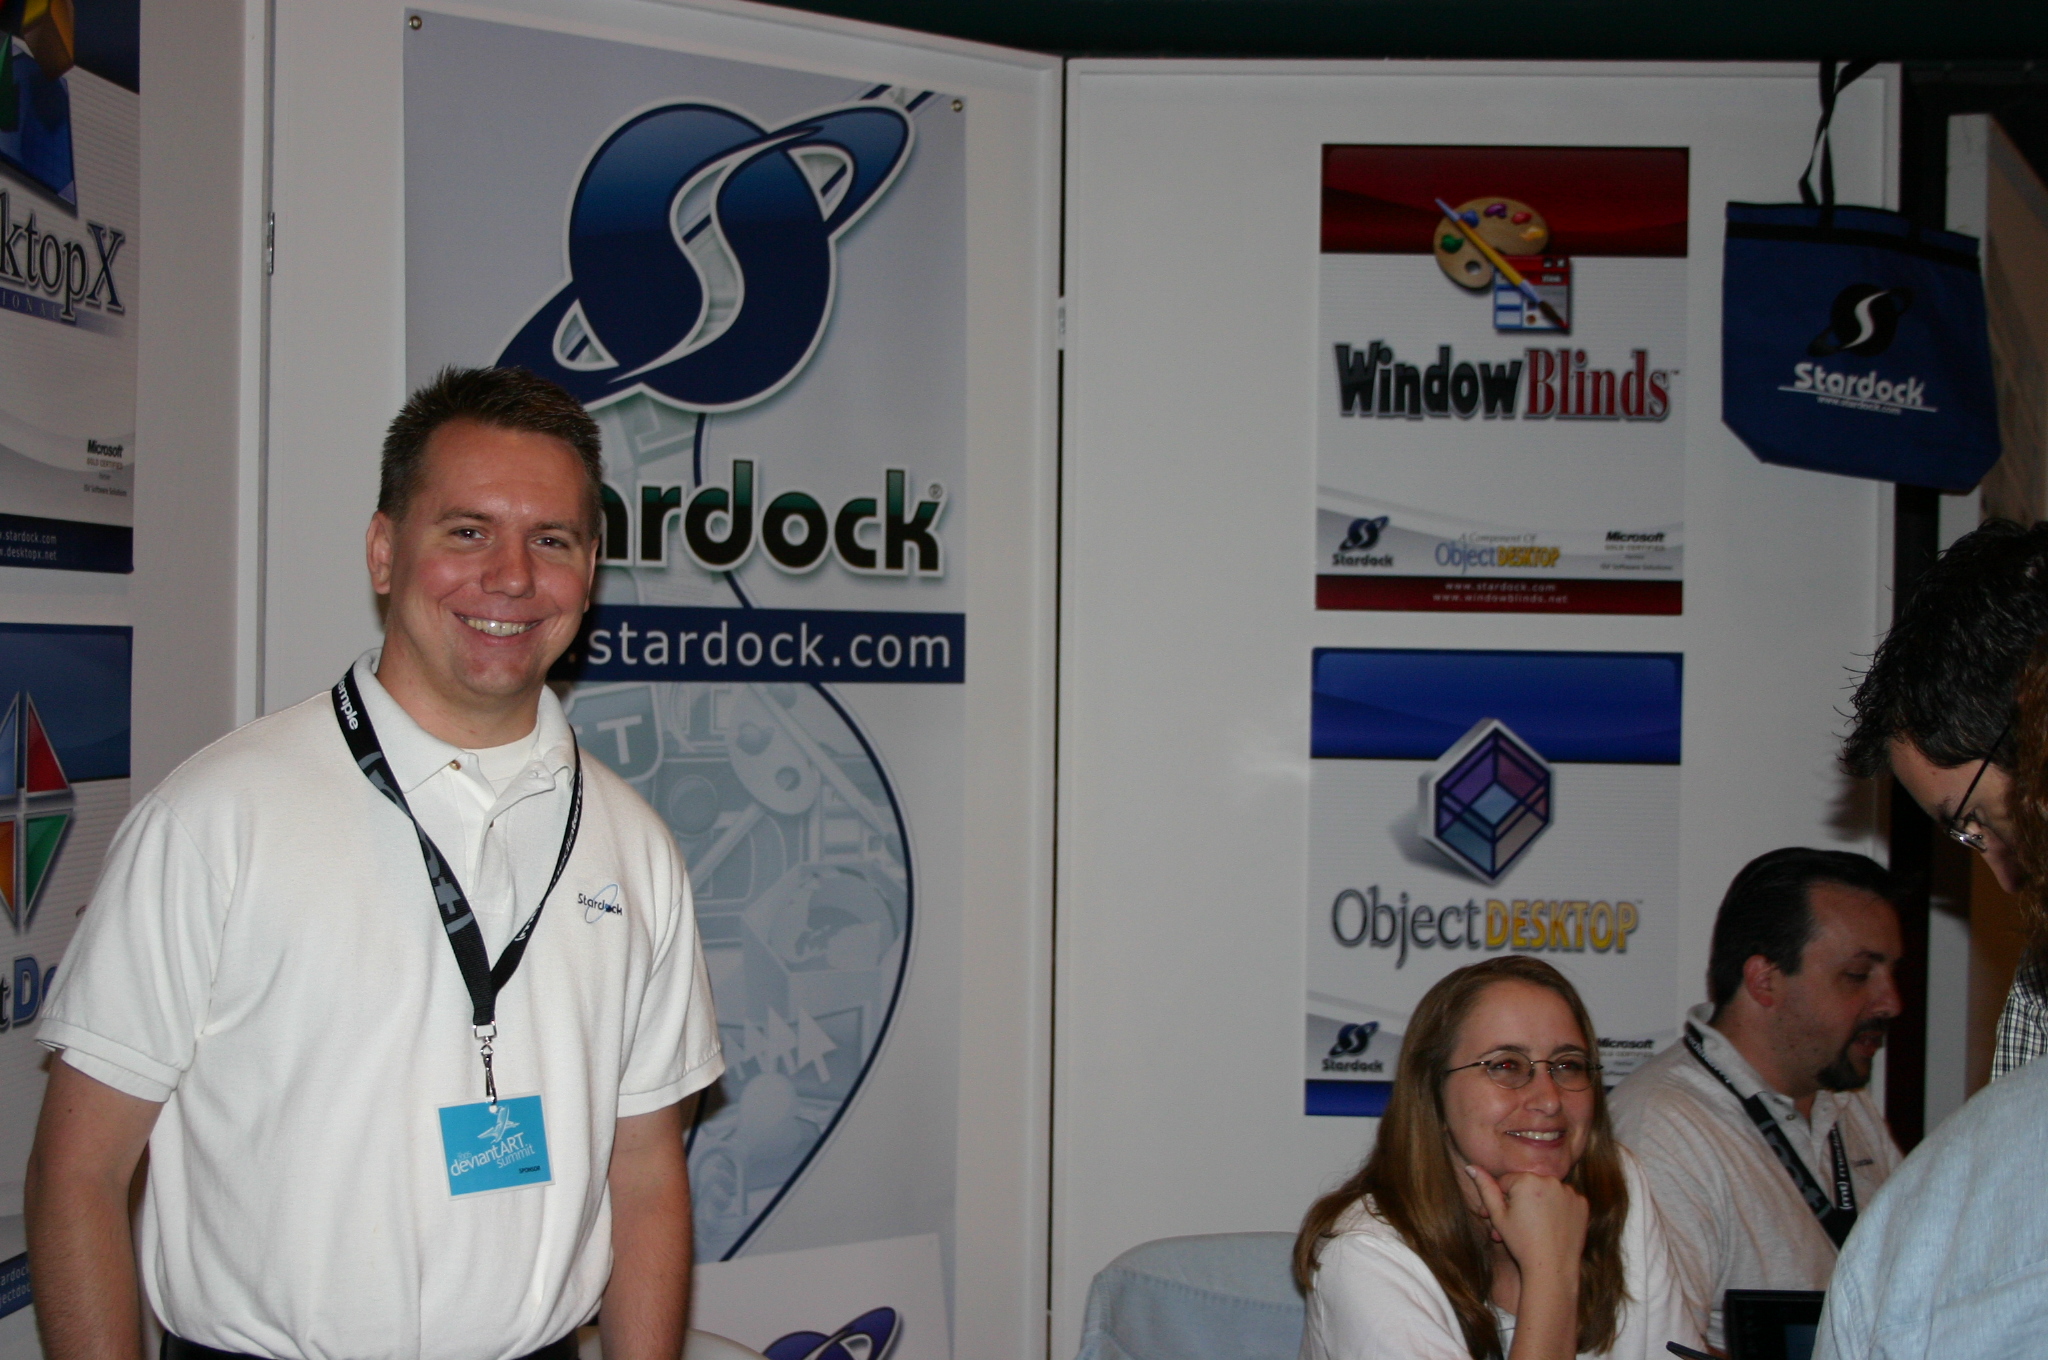 Stardock CEO Brad Wardell